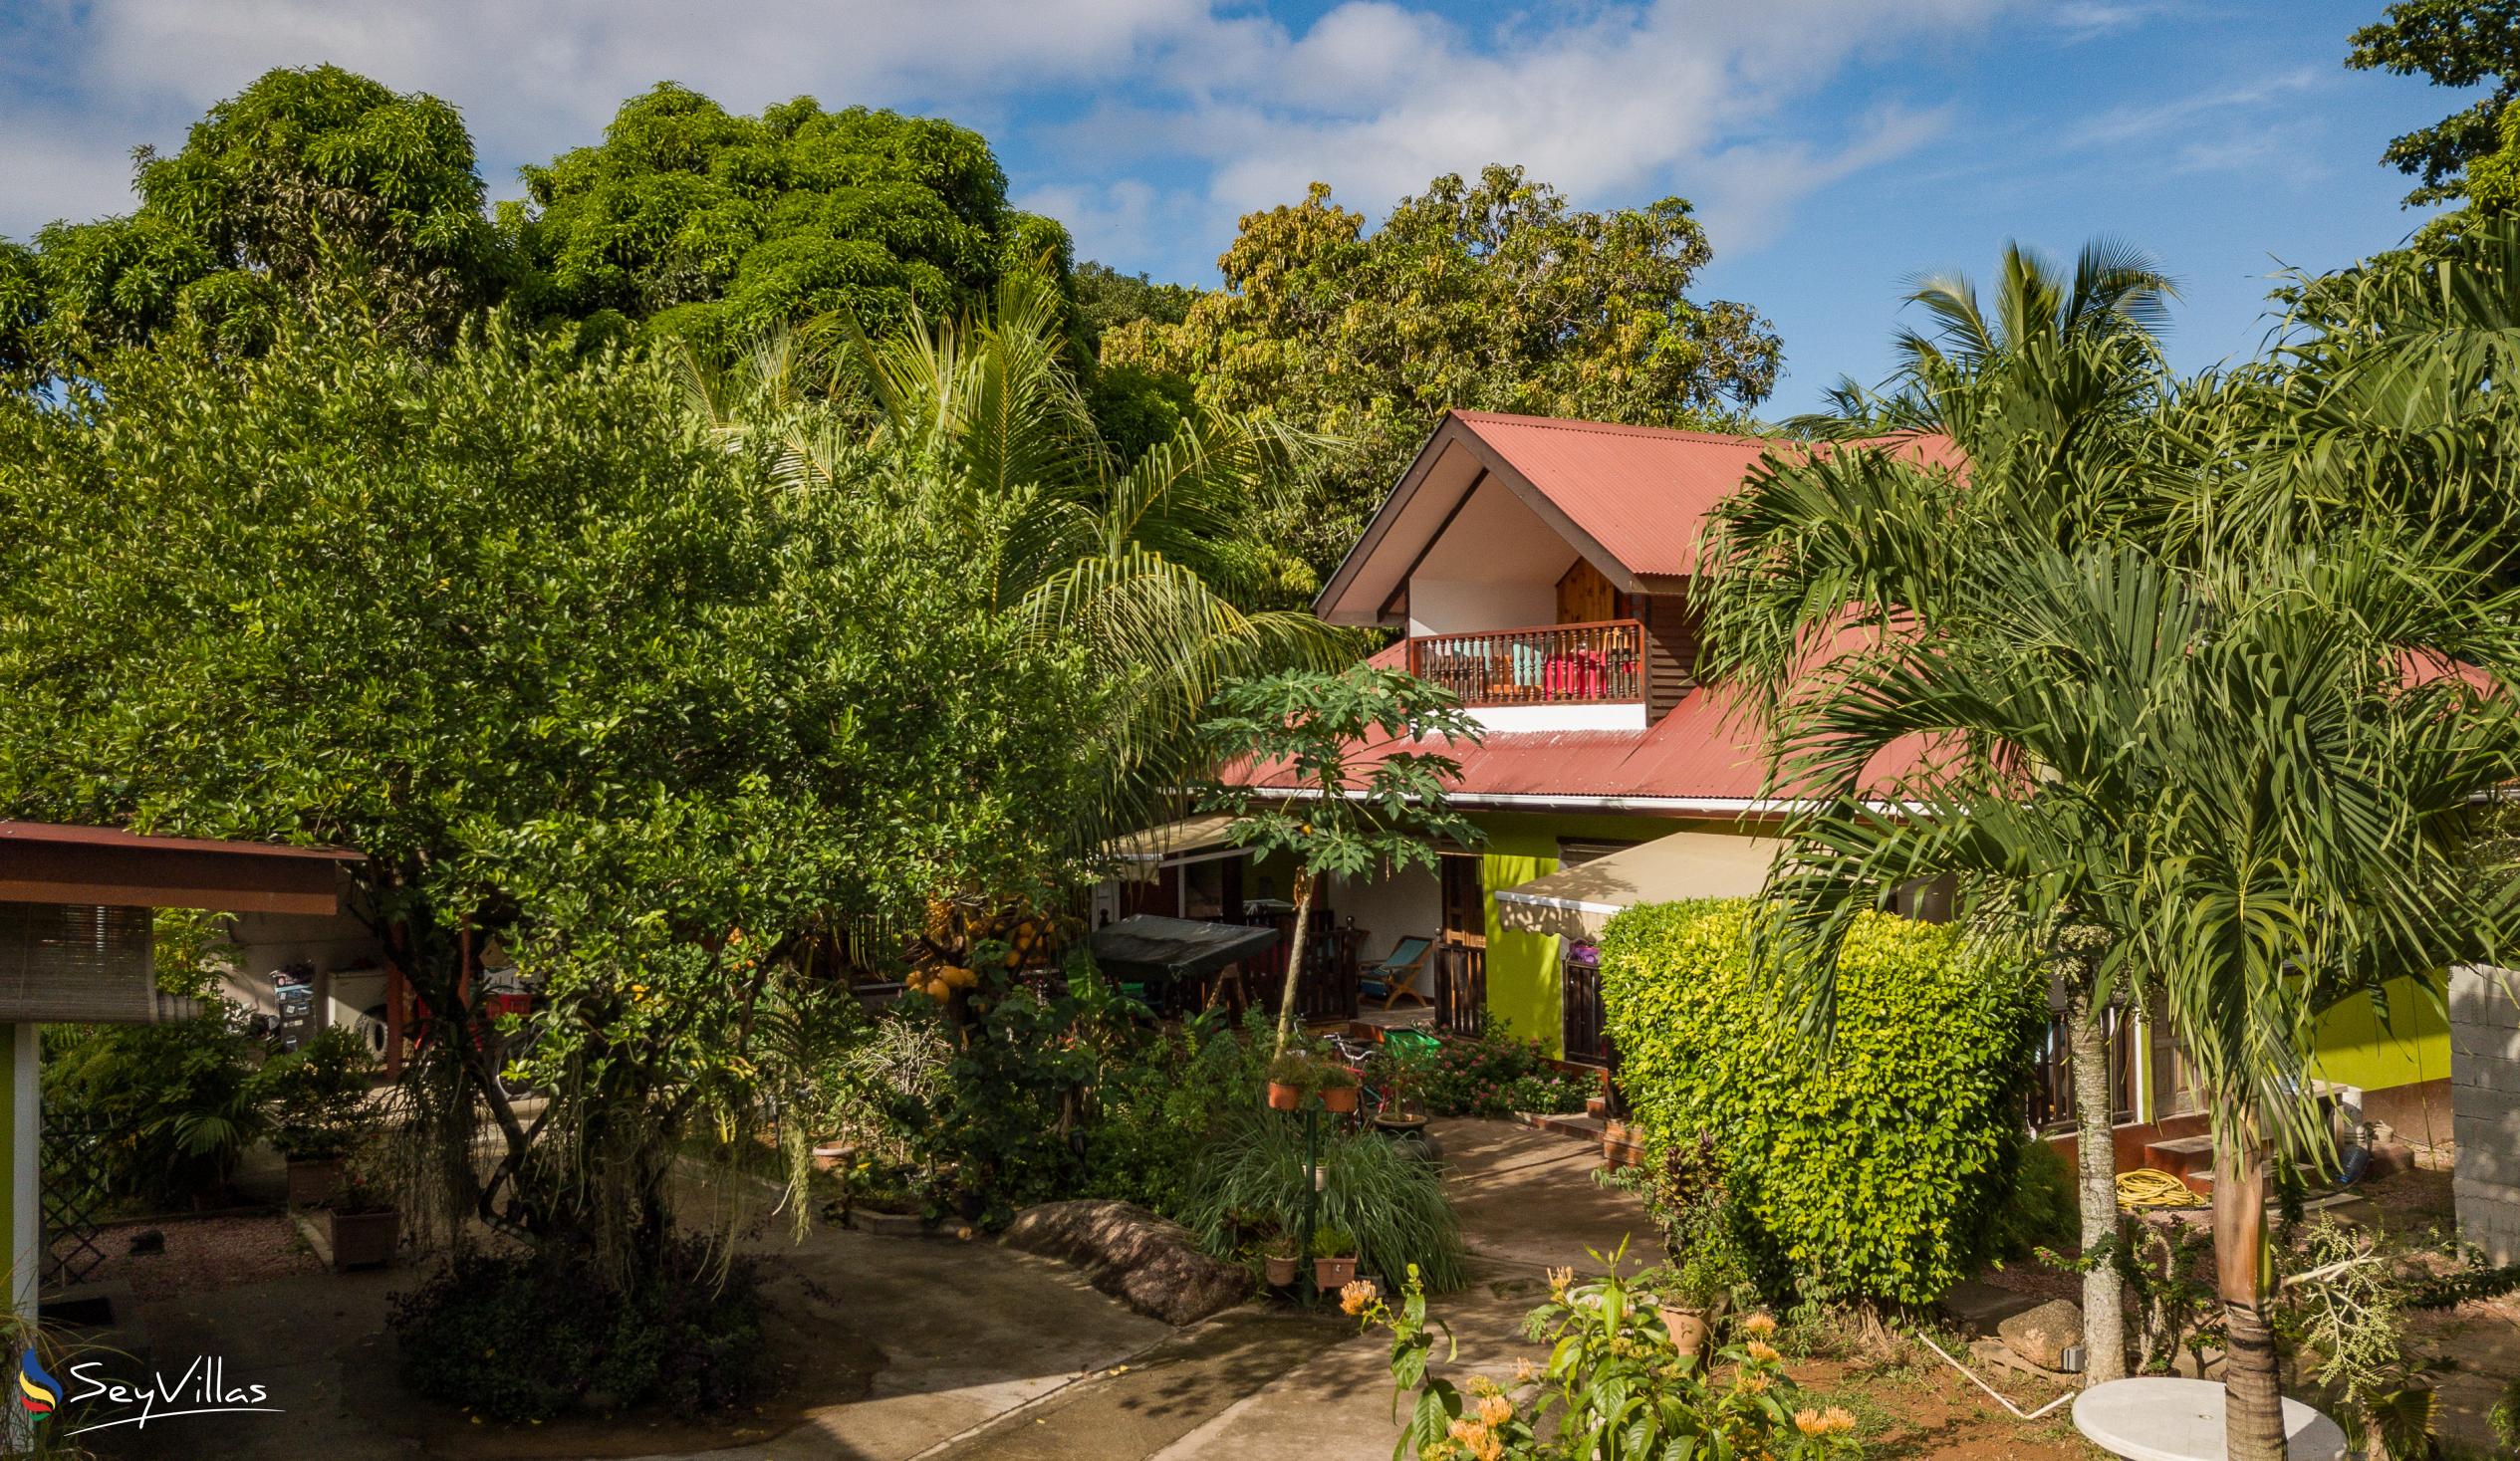 Foto 5: Chloe's Cottage - Aussenbereich - La Digue (Seychellen)